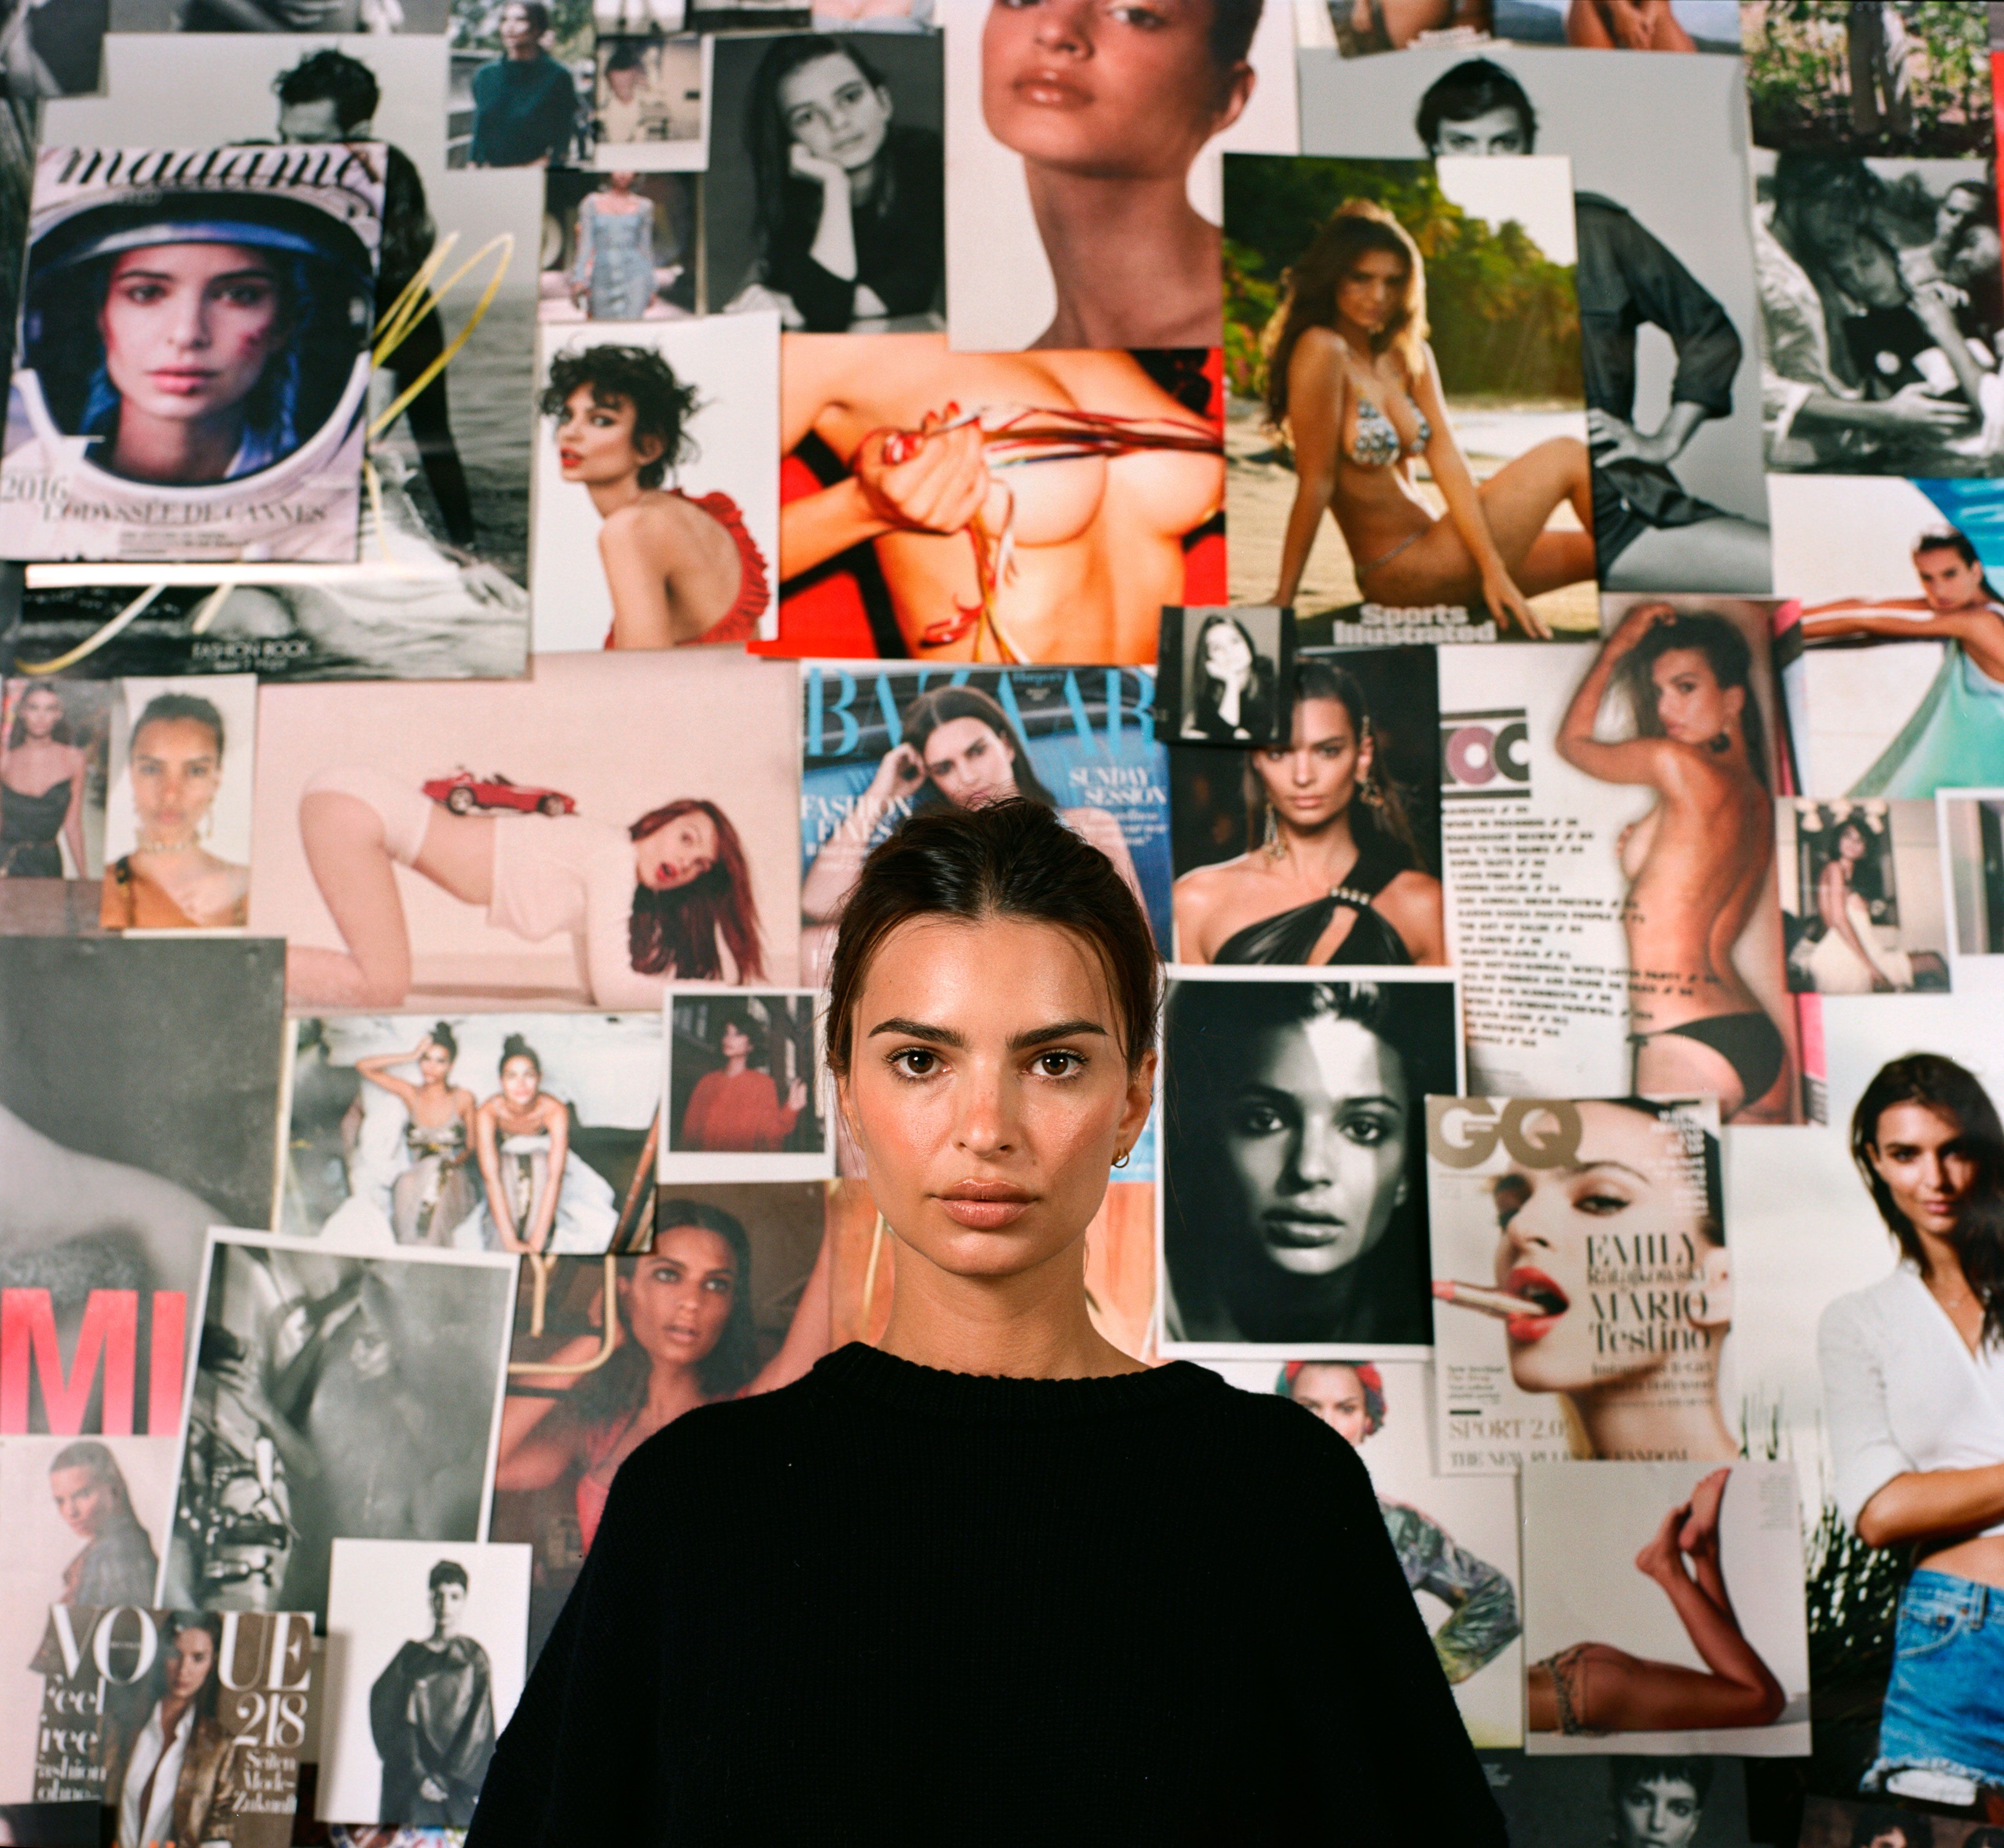 Model Emily Ratajkowski 2019 Wallpapers